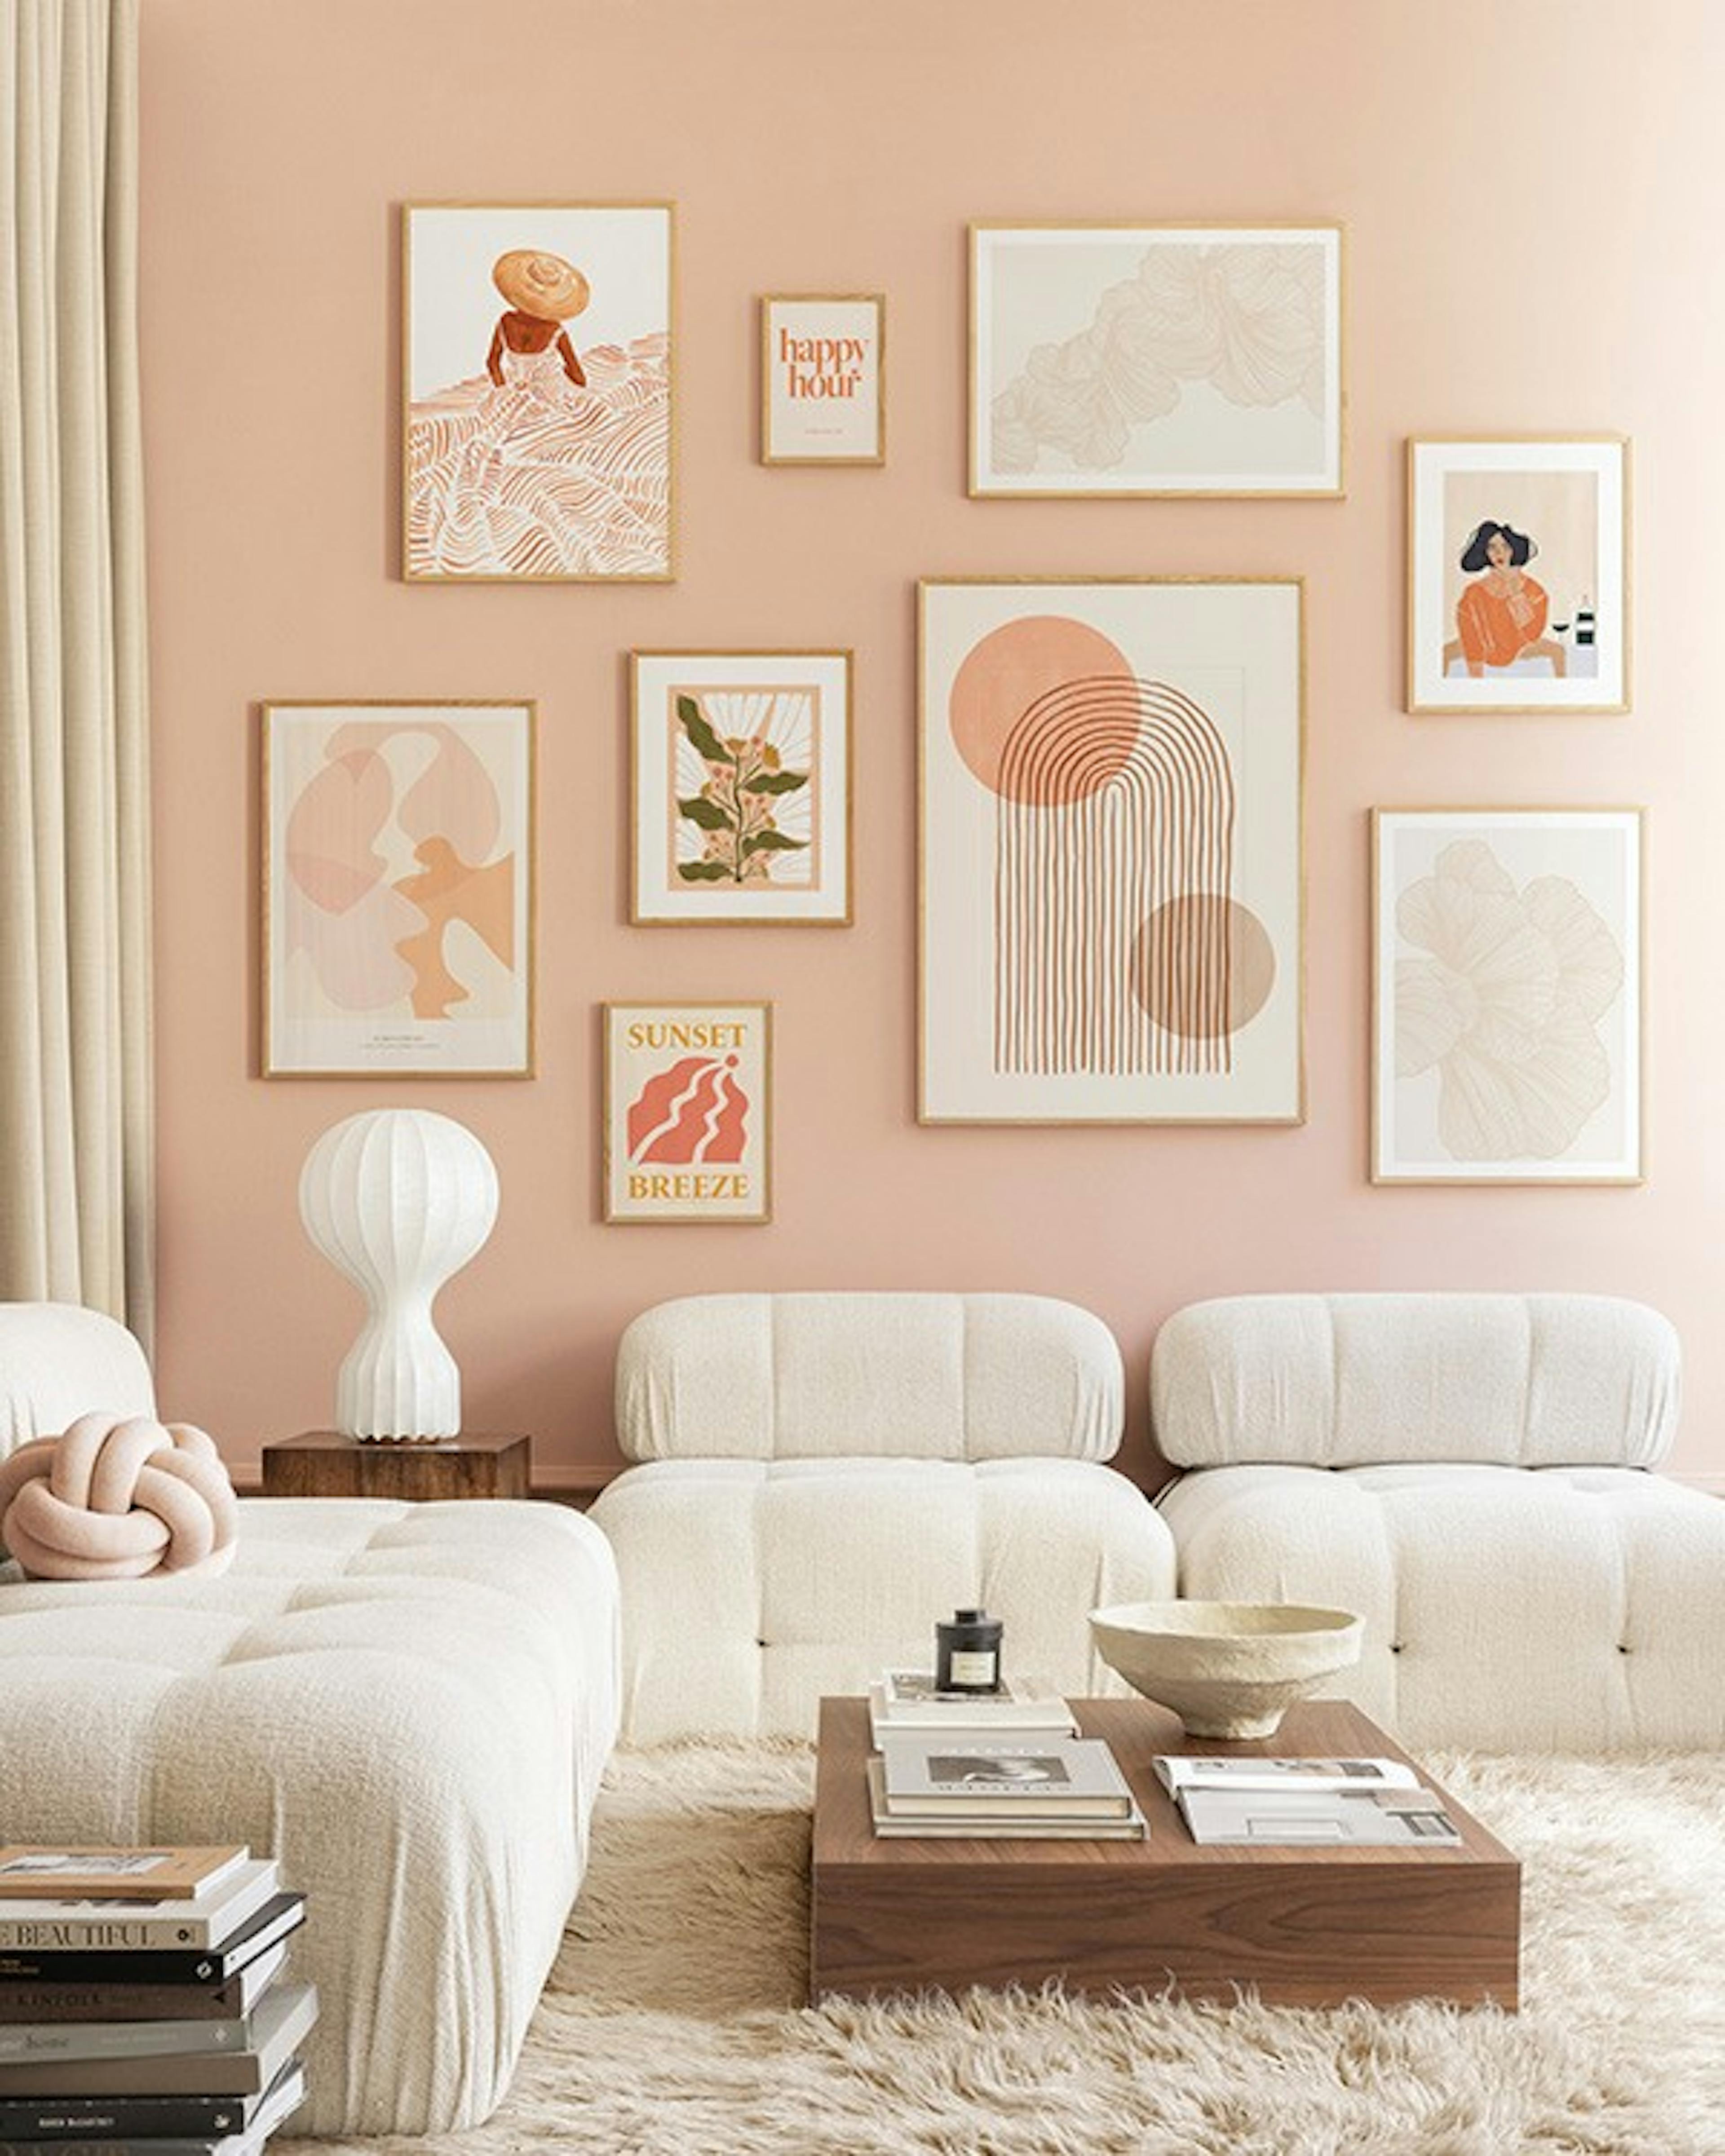 Peachy livingroom billedvæg